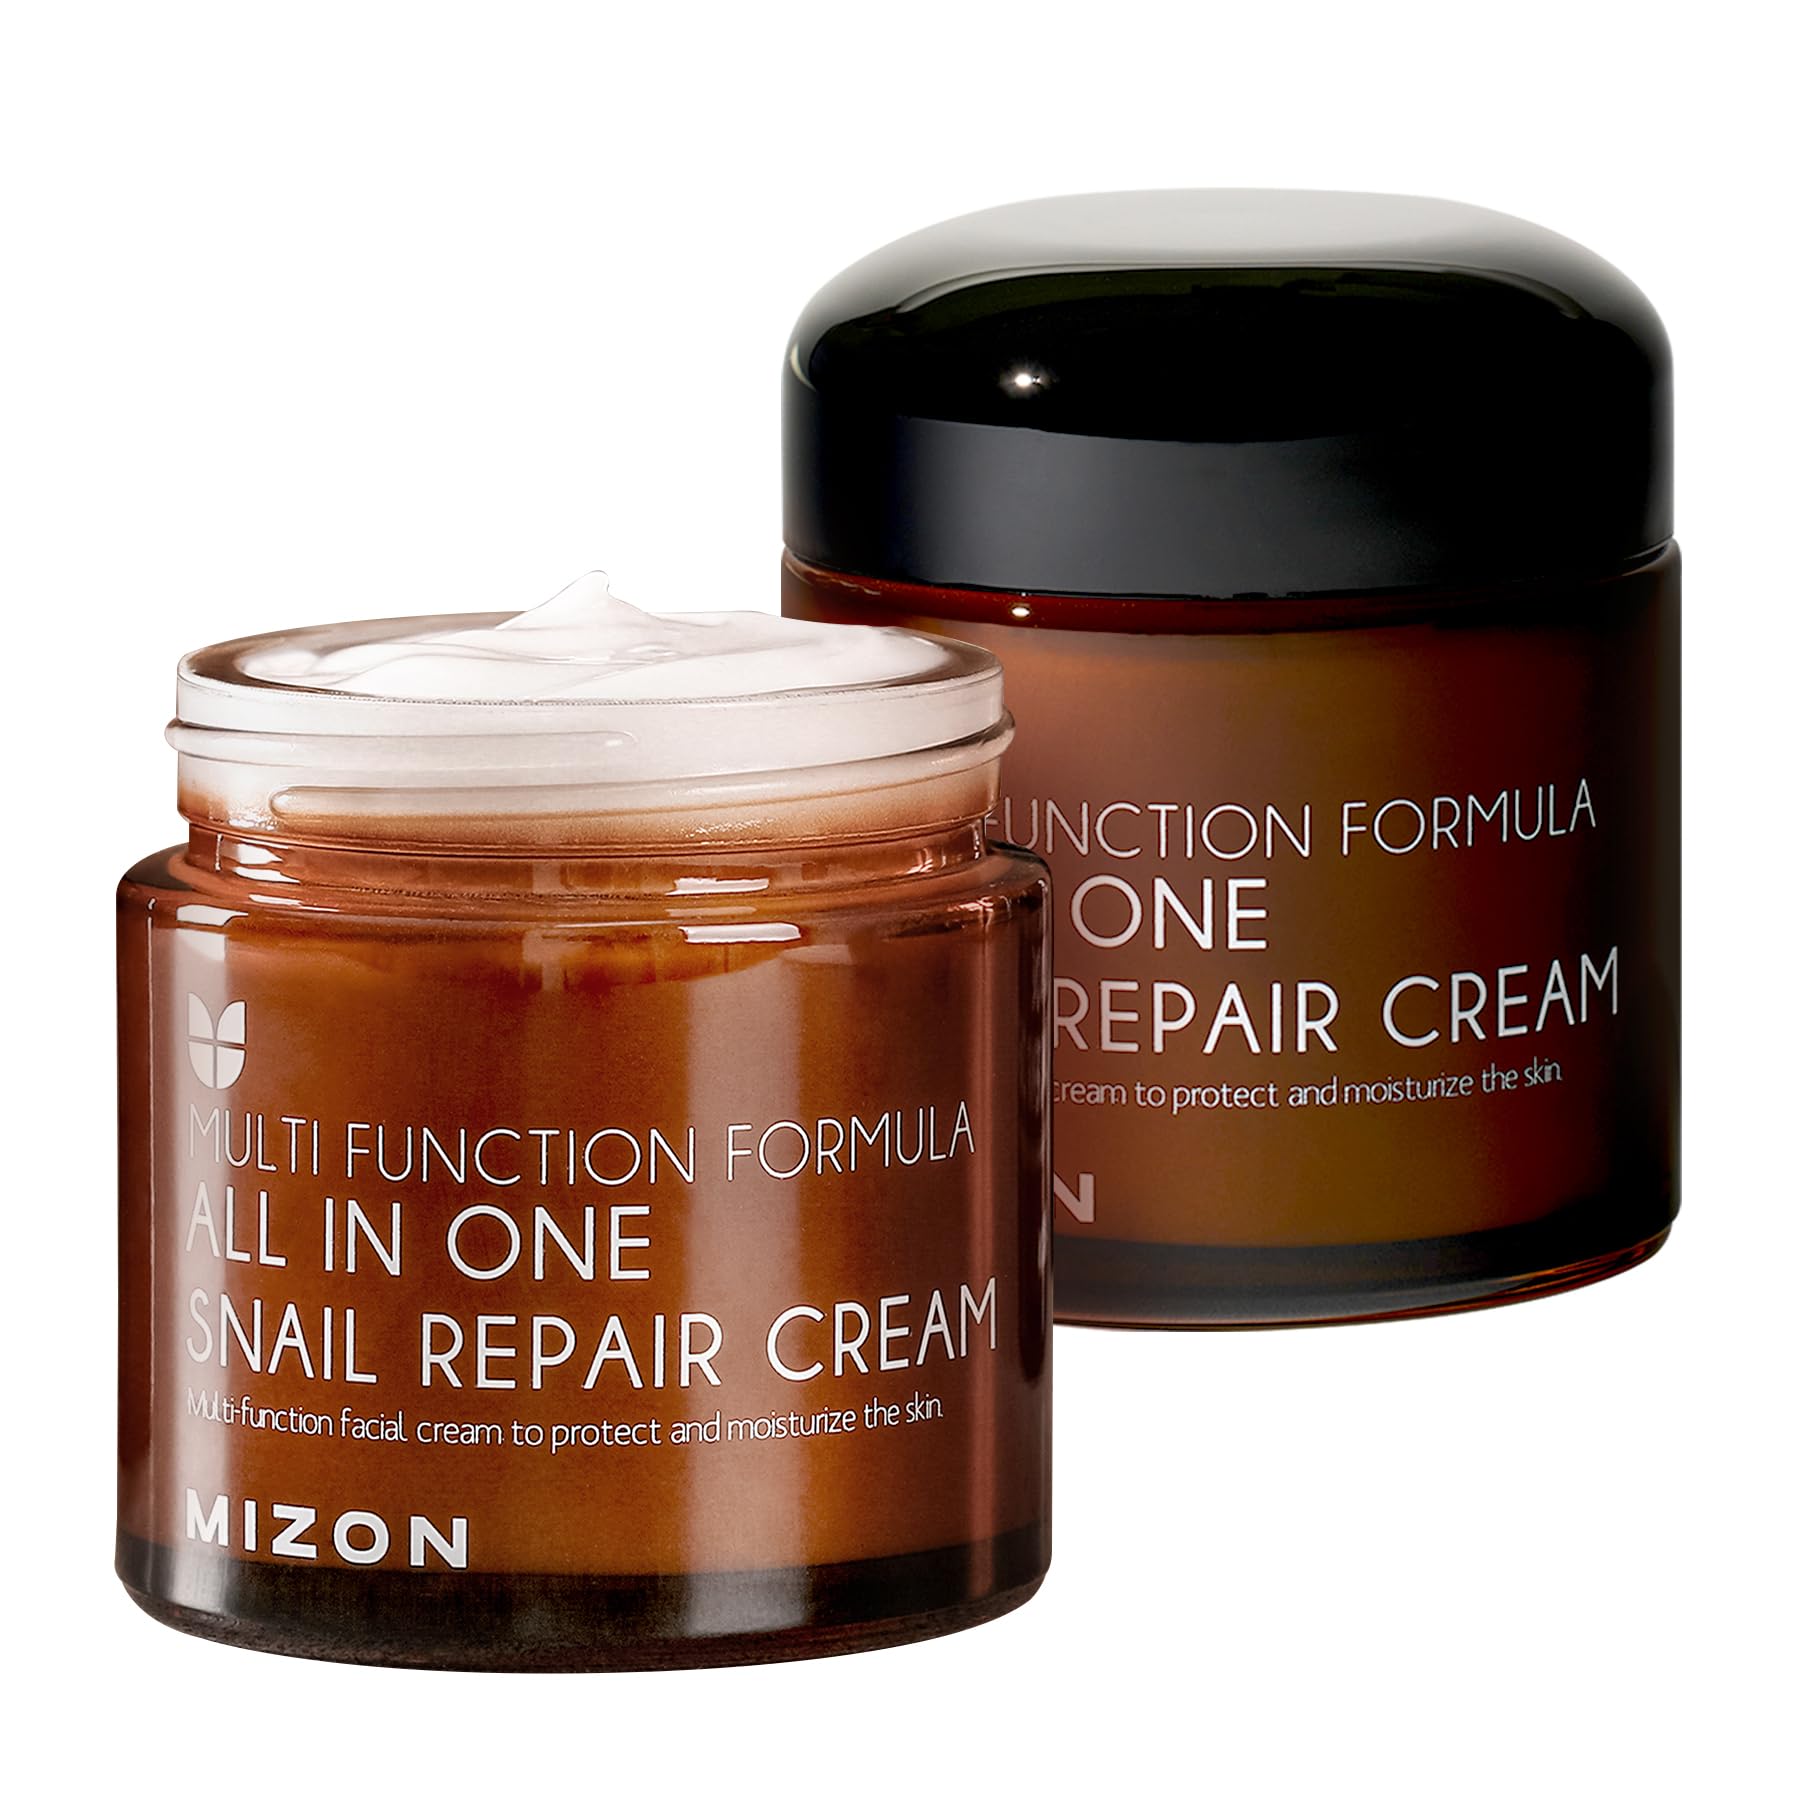 MIZON - All In One Snail Repair Cream